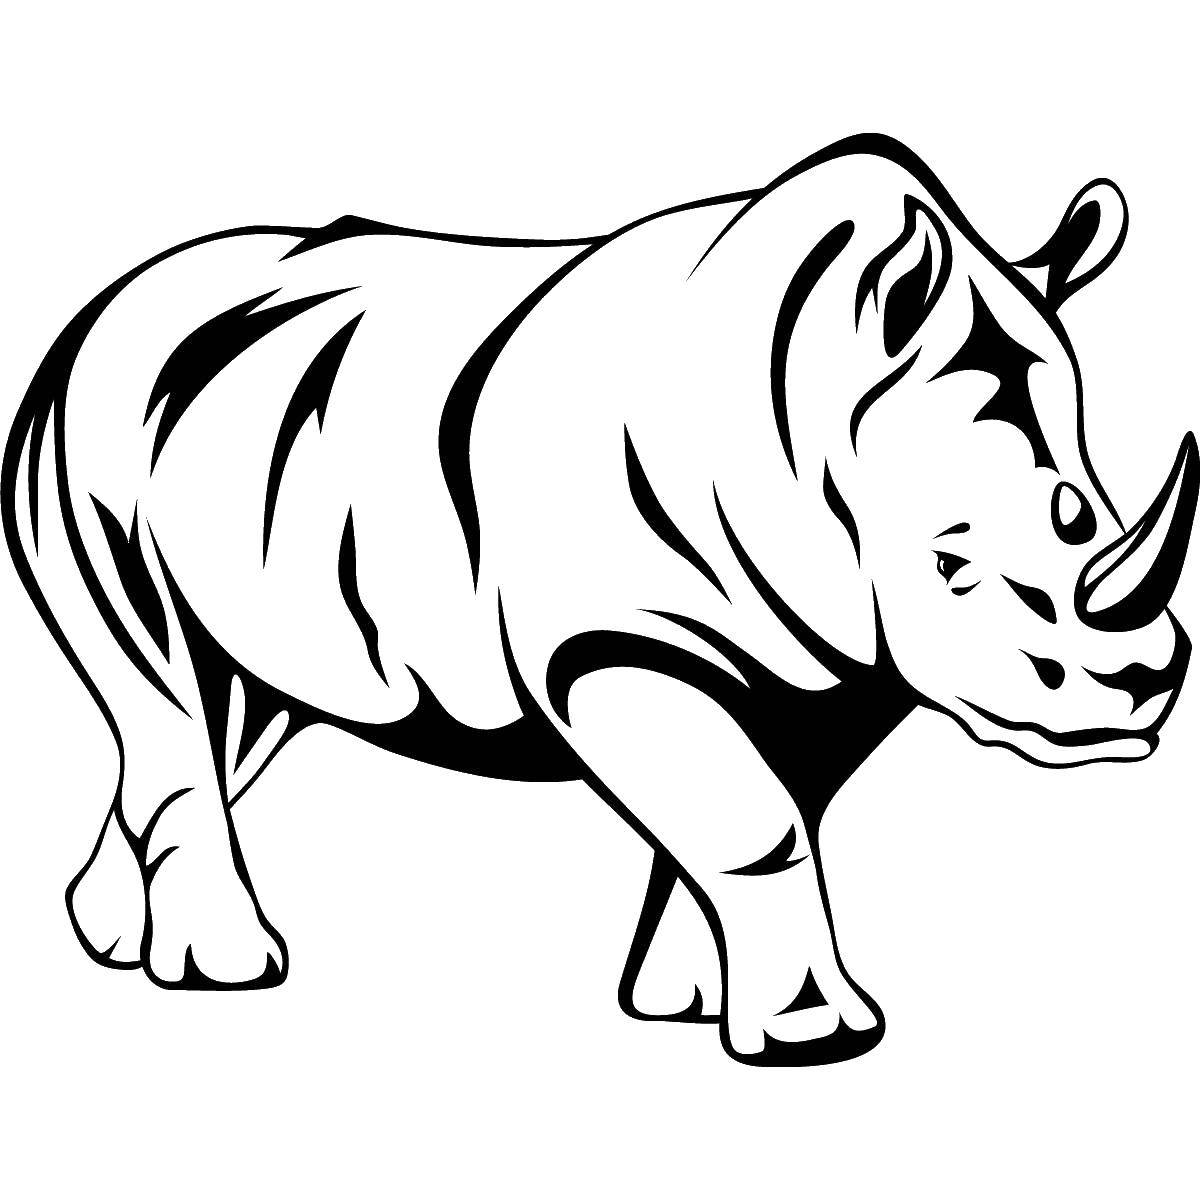 Coloring Big Rhino. Category Animals. Tags:  Animals, Rhino.